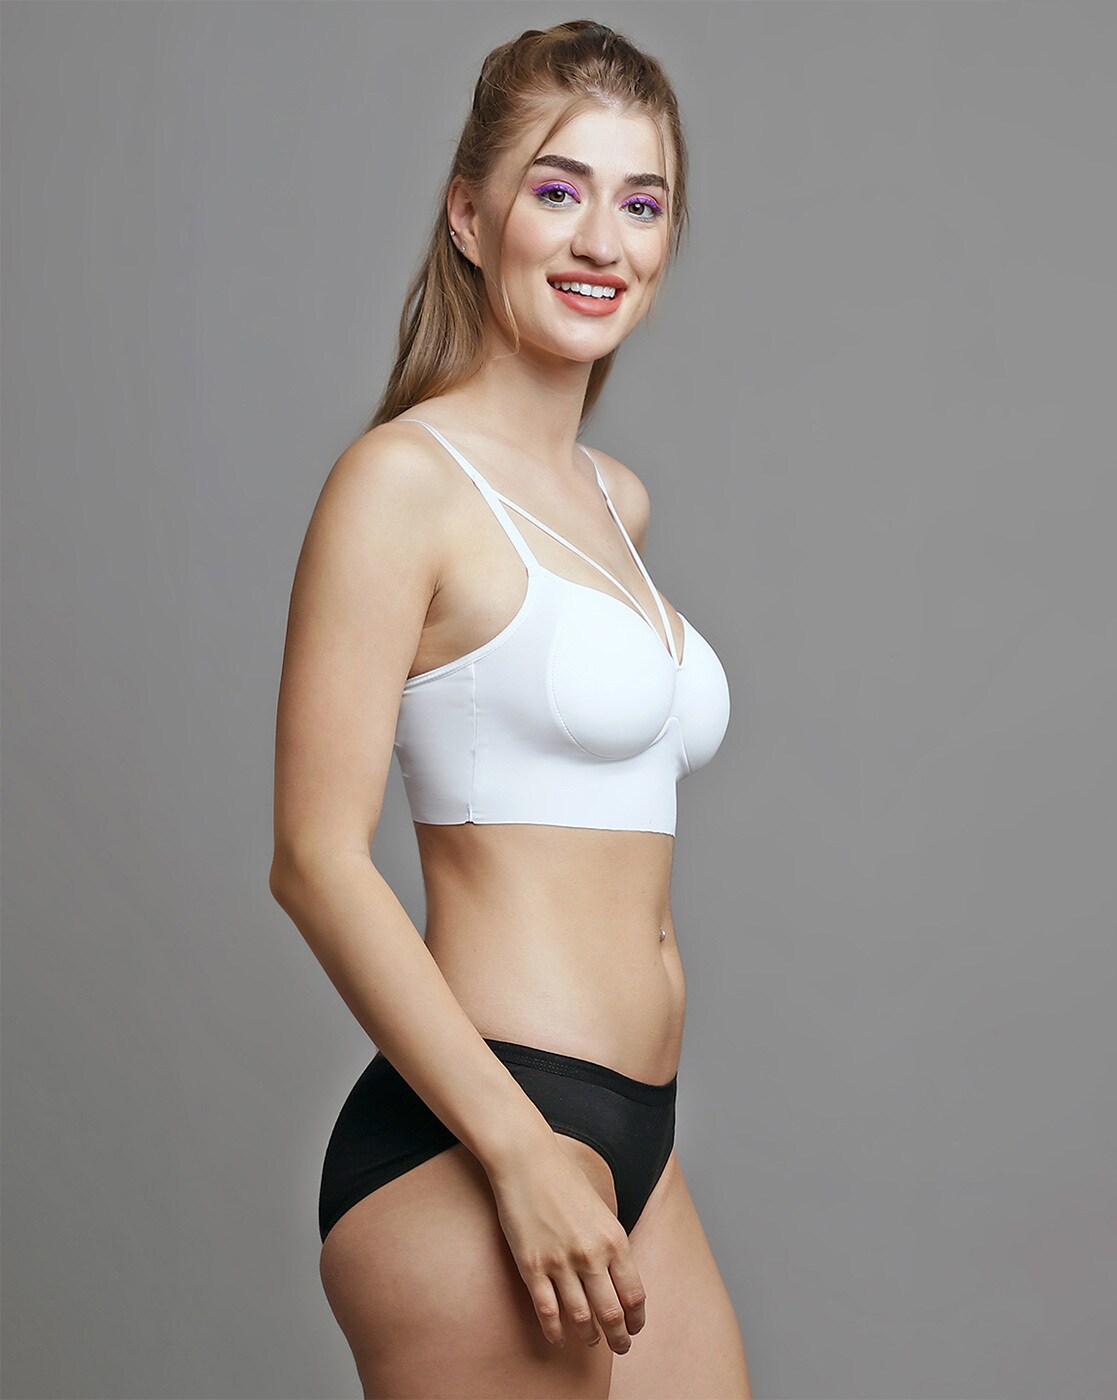 Buy White Lingerie Sets for Women by PrettyCat Online